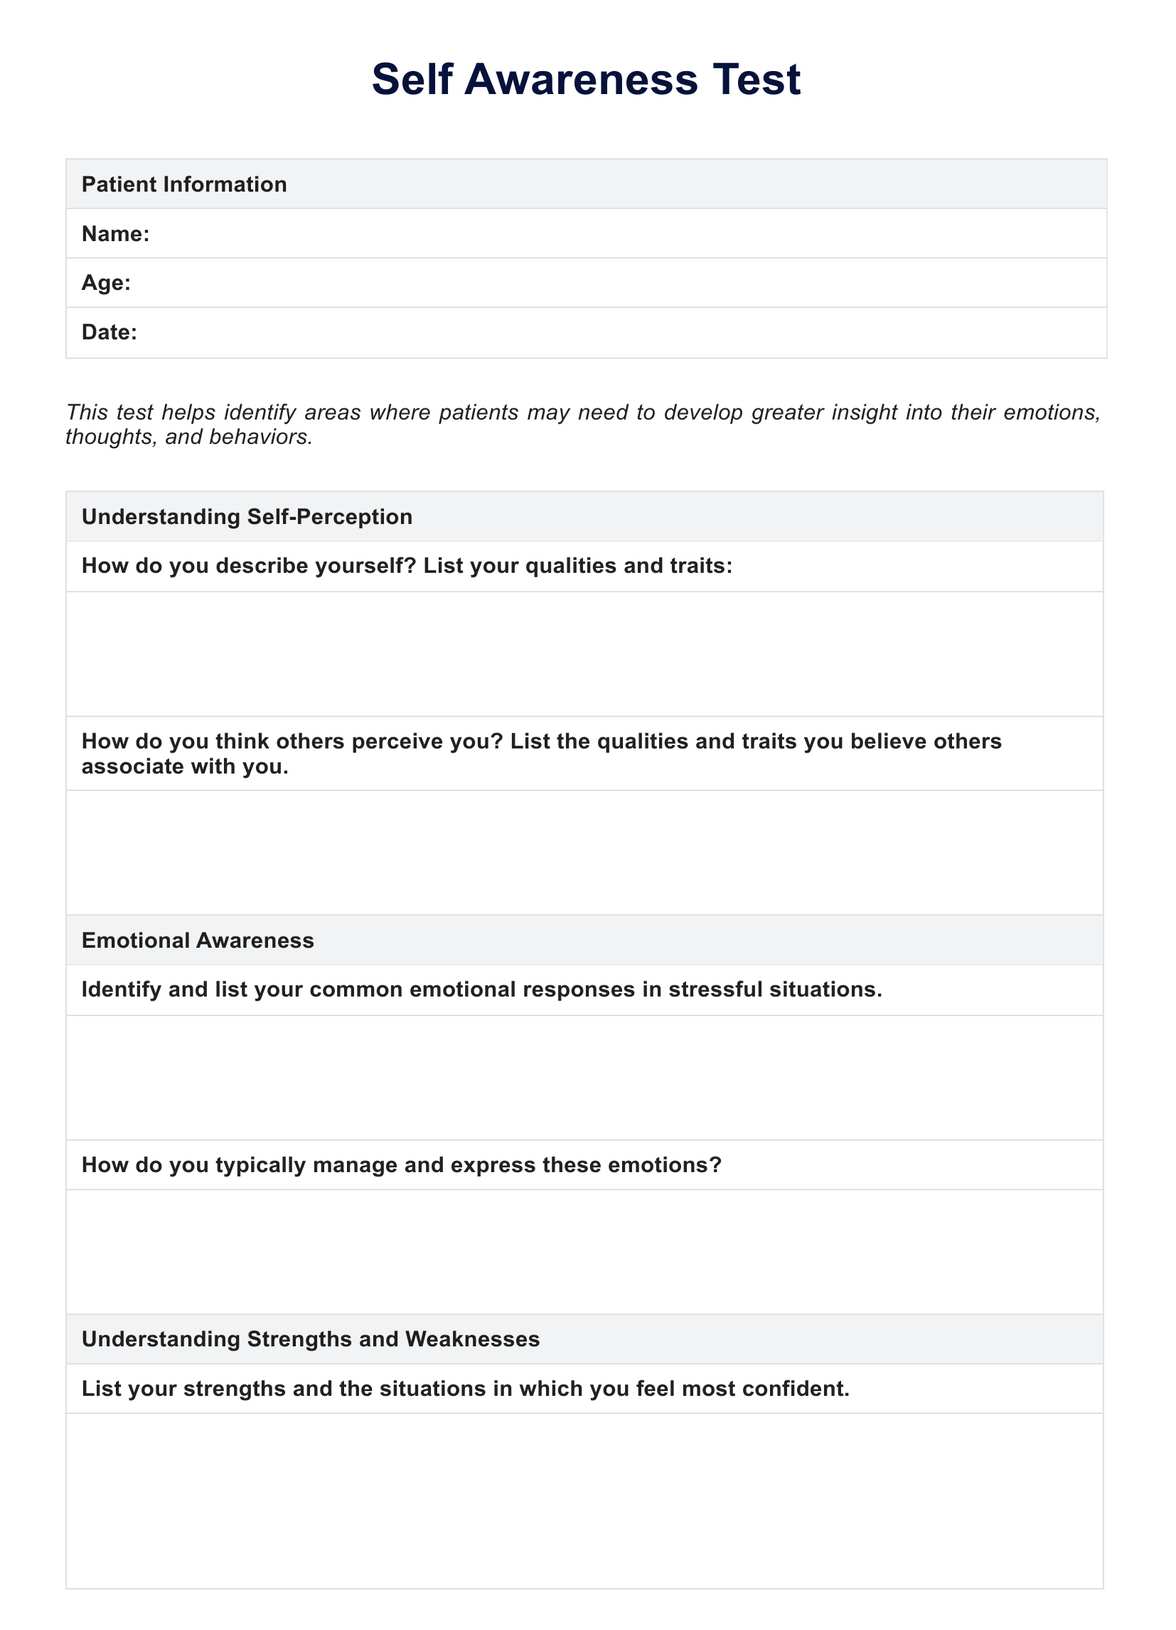 Self-Awareness Test PDF Example